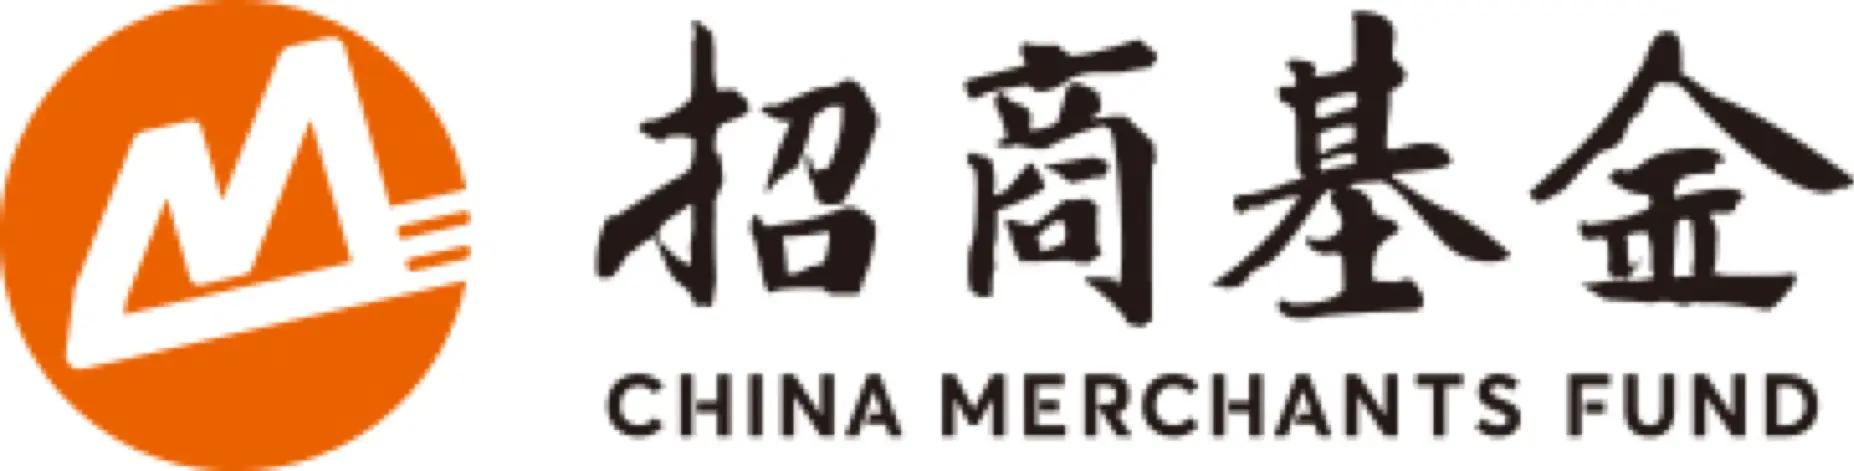 CHINA MERCHANTS FUND